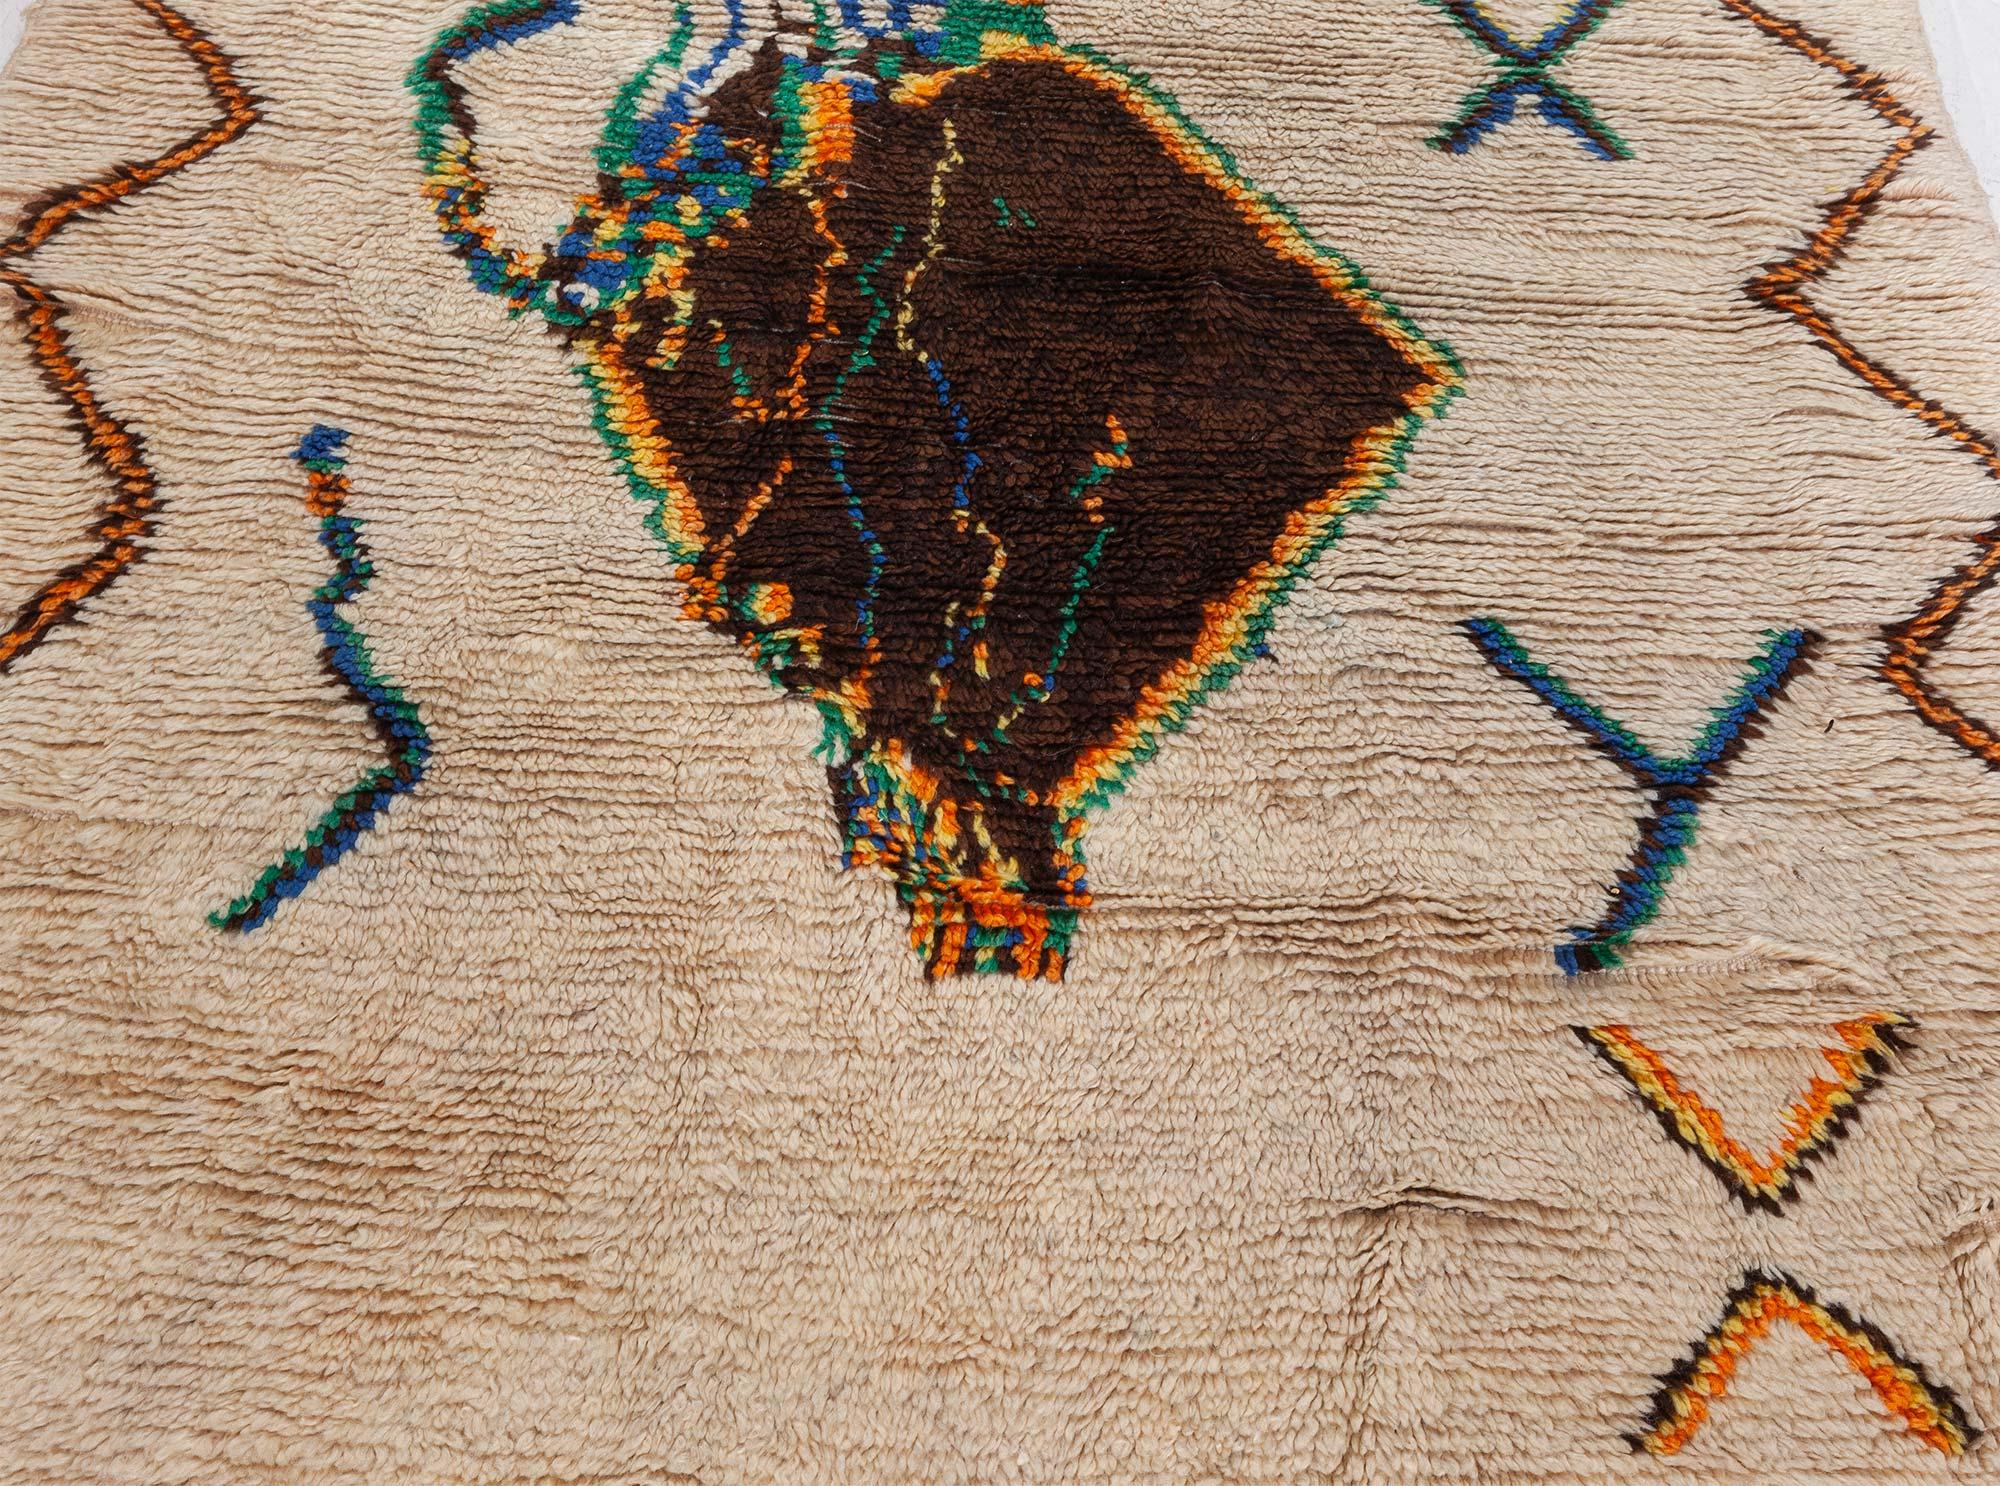 Mid-20th century Tribal Geometric Moroccan wool rug
Size: 4'8